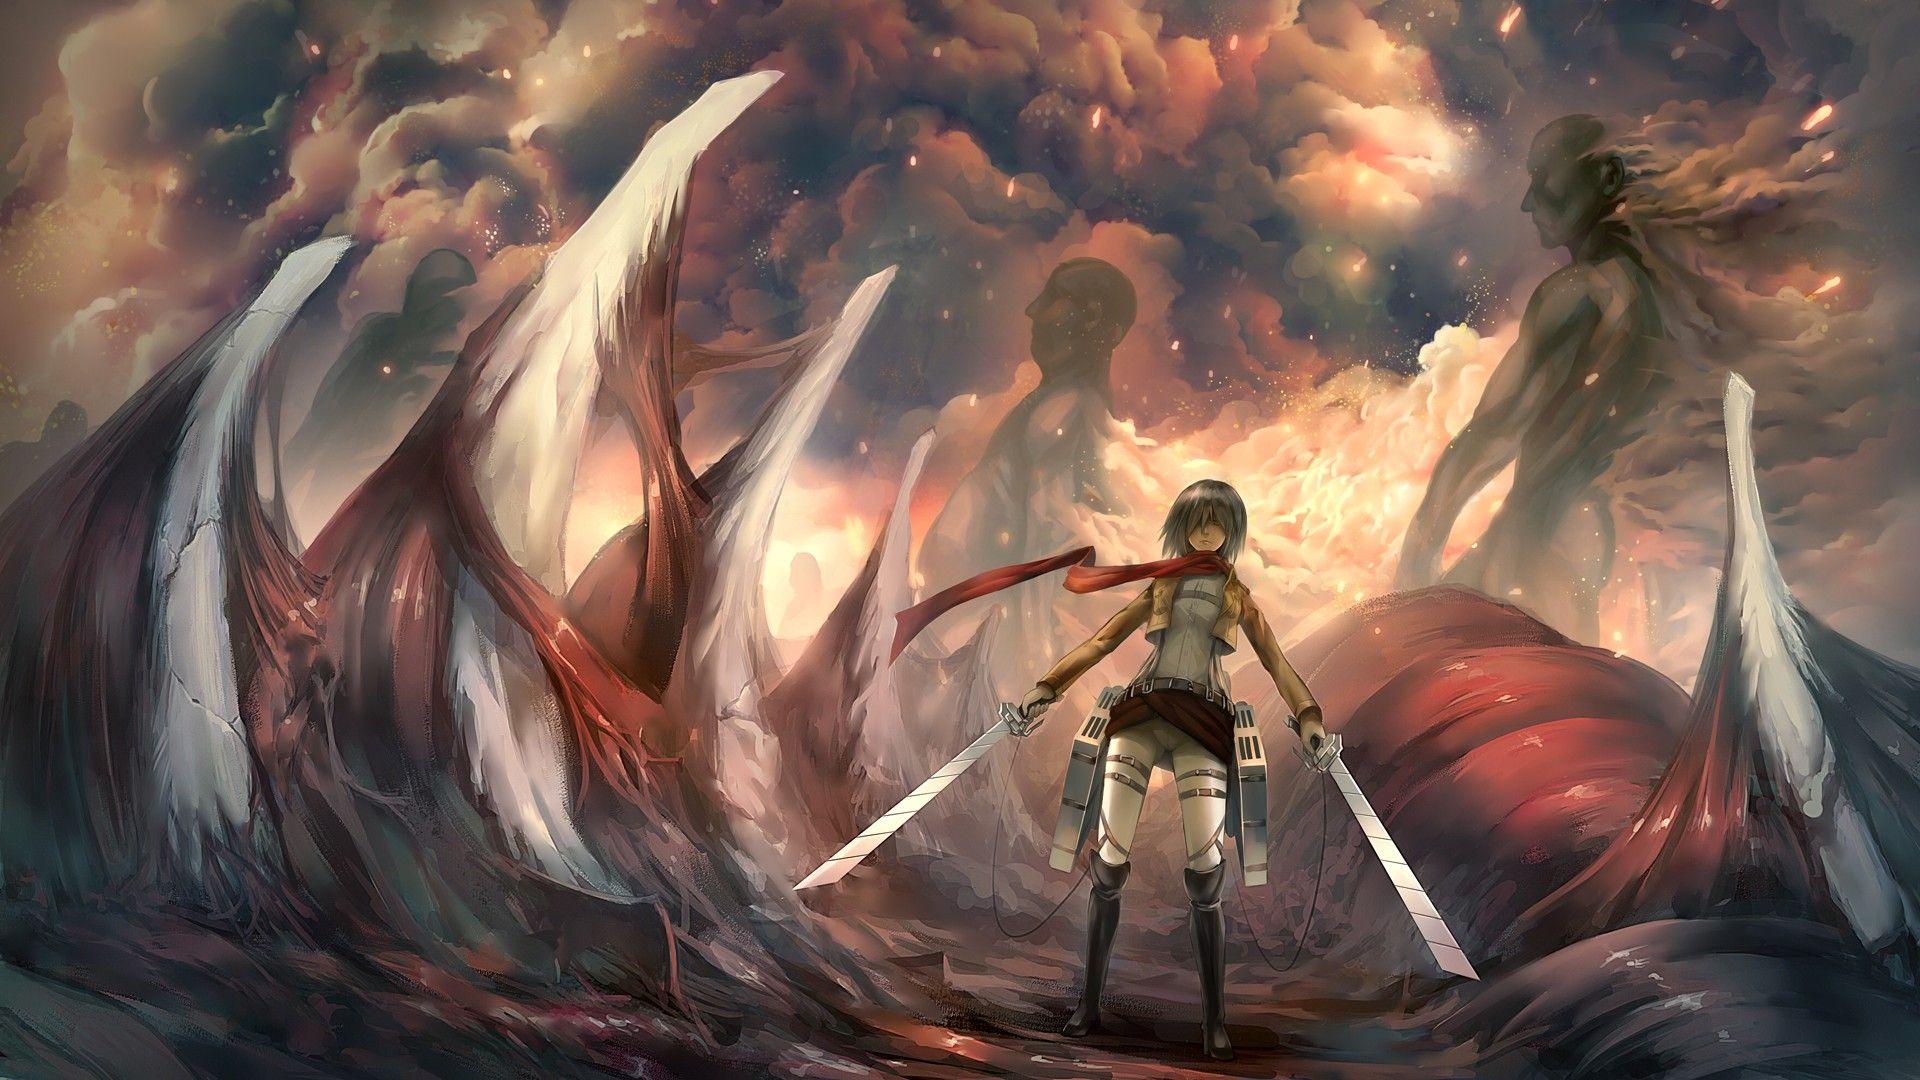 Attack On Titan Wallpaper. Attack On Titan Background. Attack on titan art, HD anime wallpaper, Attack on titan